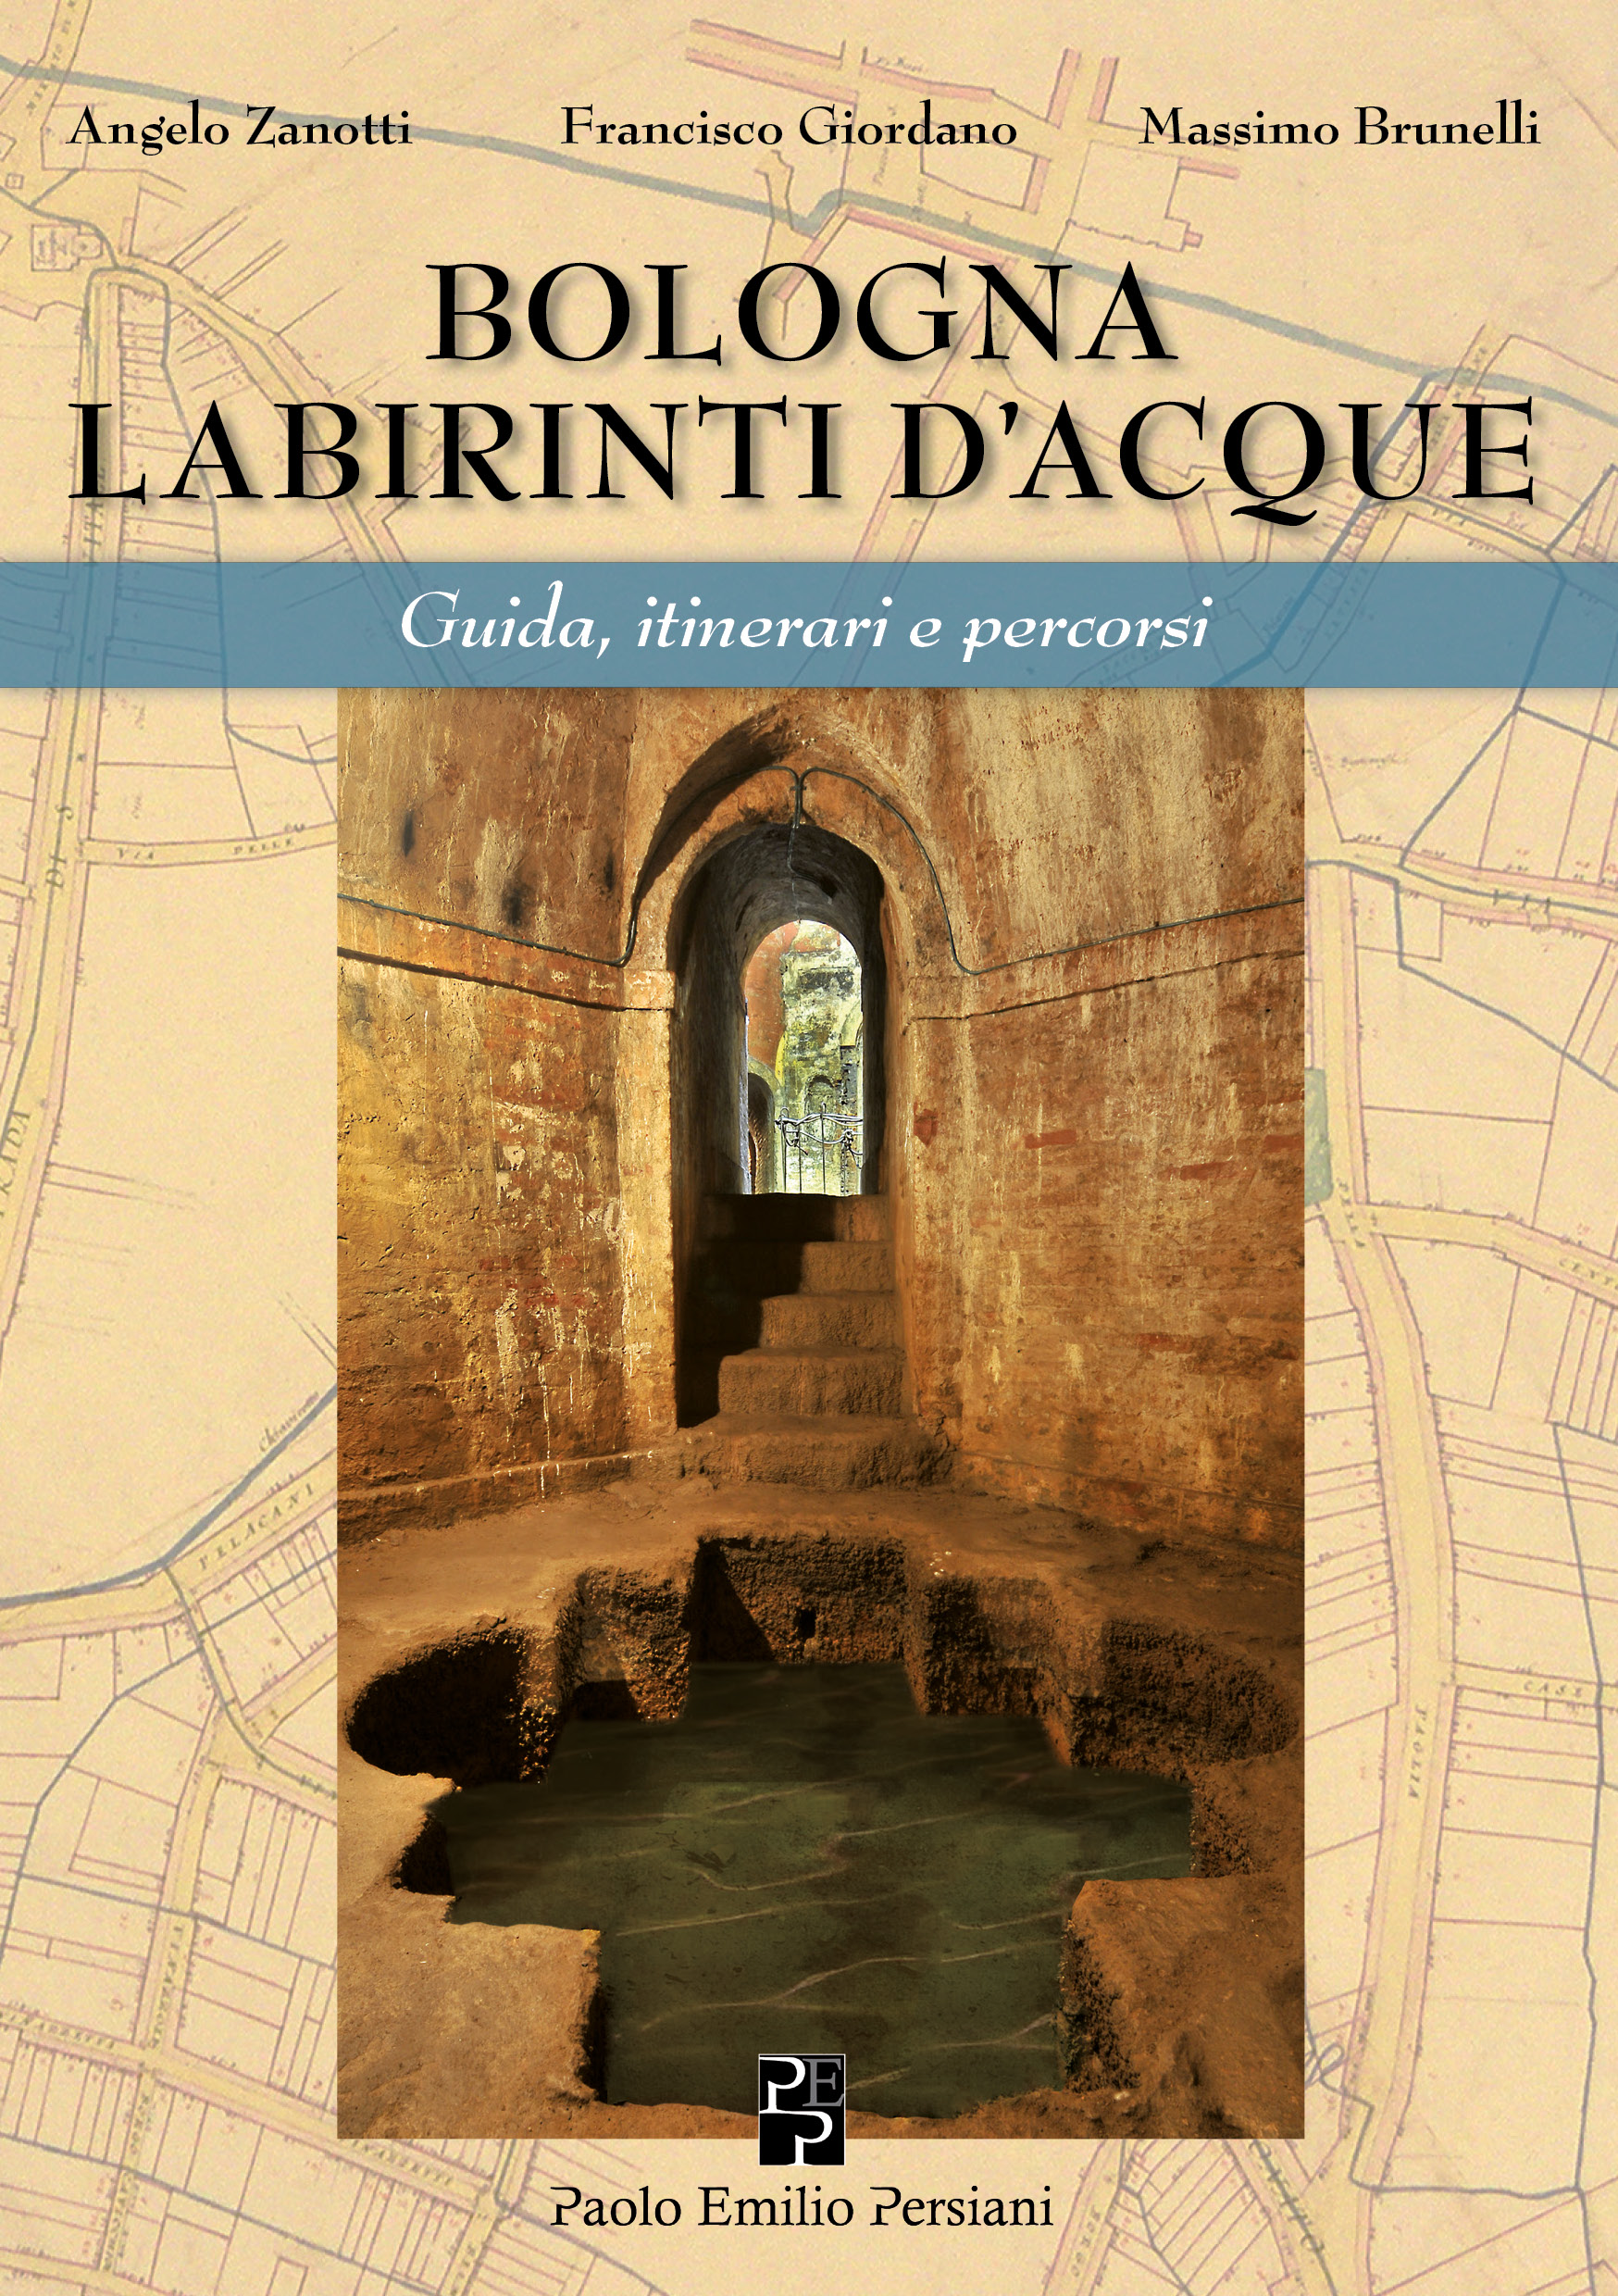 Labirinti d’acque 2ed cover